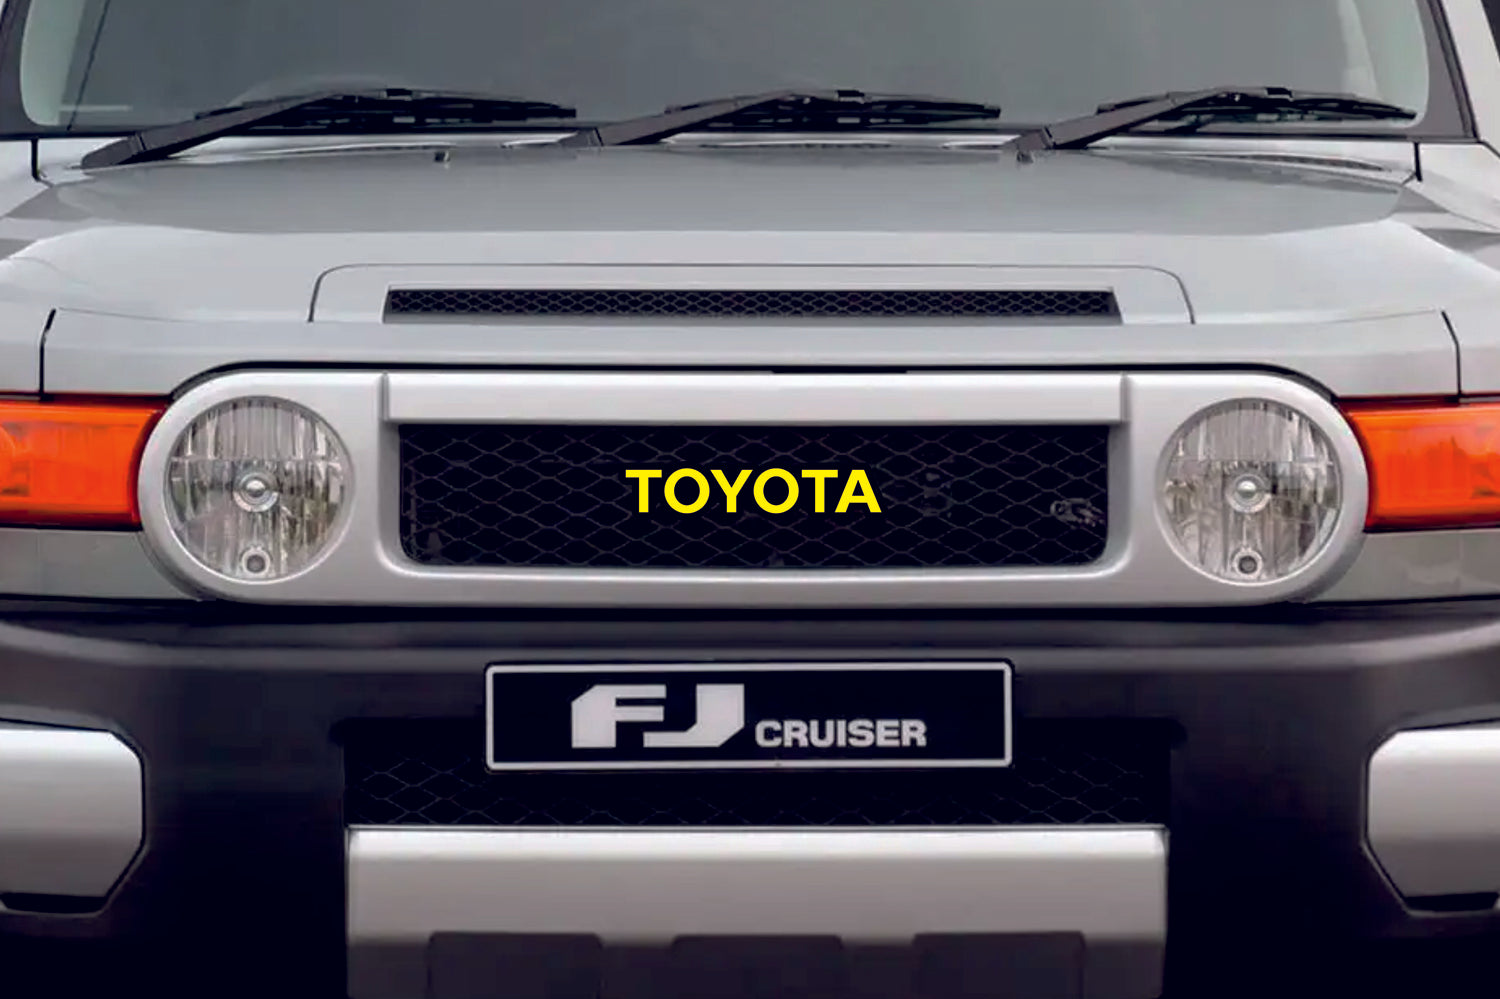 Toyota FJ CRUISER Radiator grille emblem with TOYOTA logo